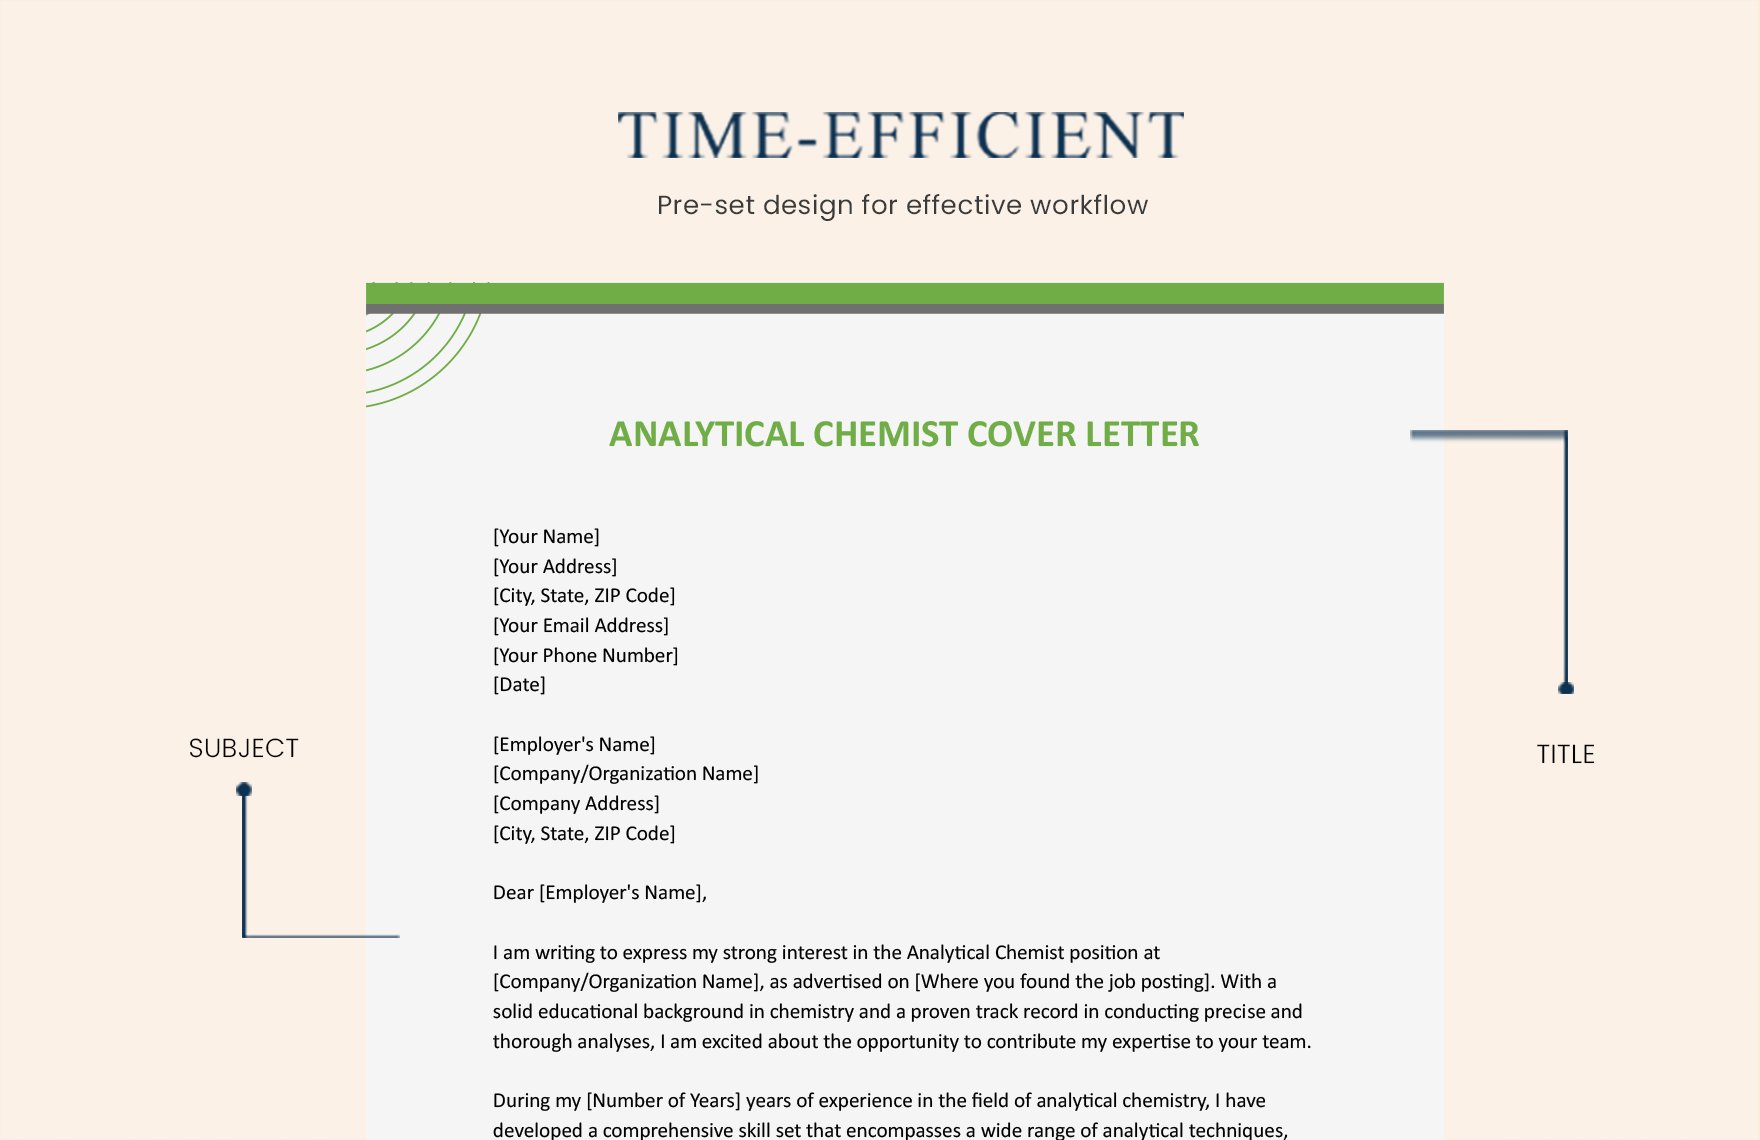 Analytical Chemist Cover Letter